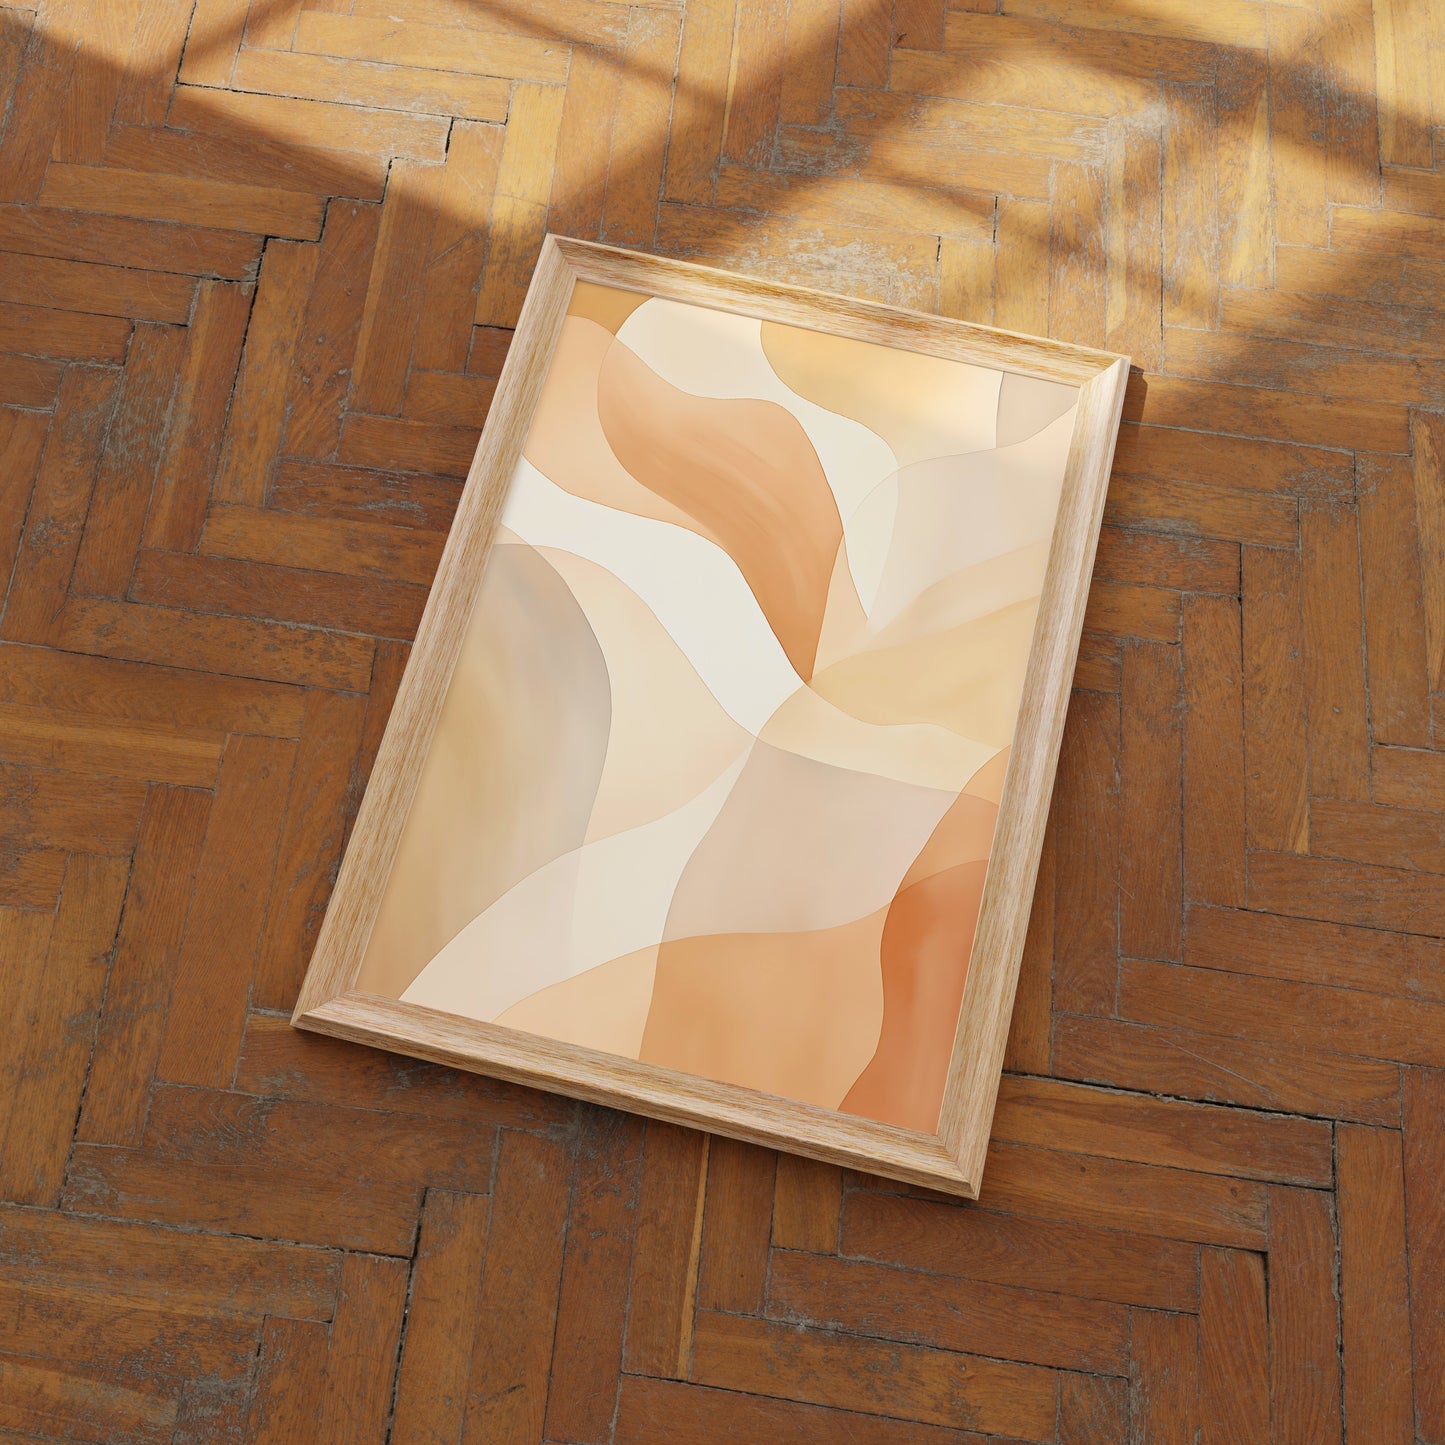 Abstract art in wooden frame on herringbone floor.